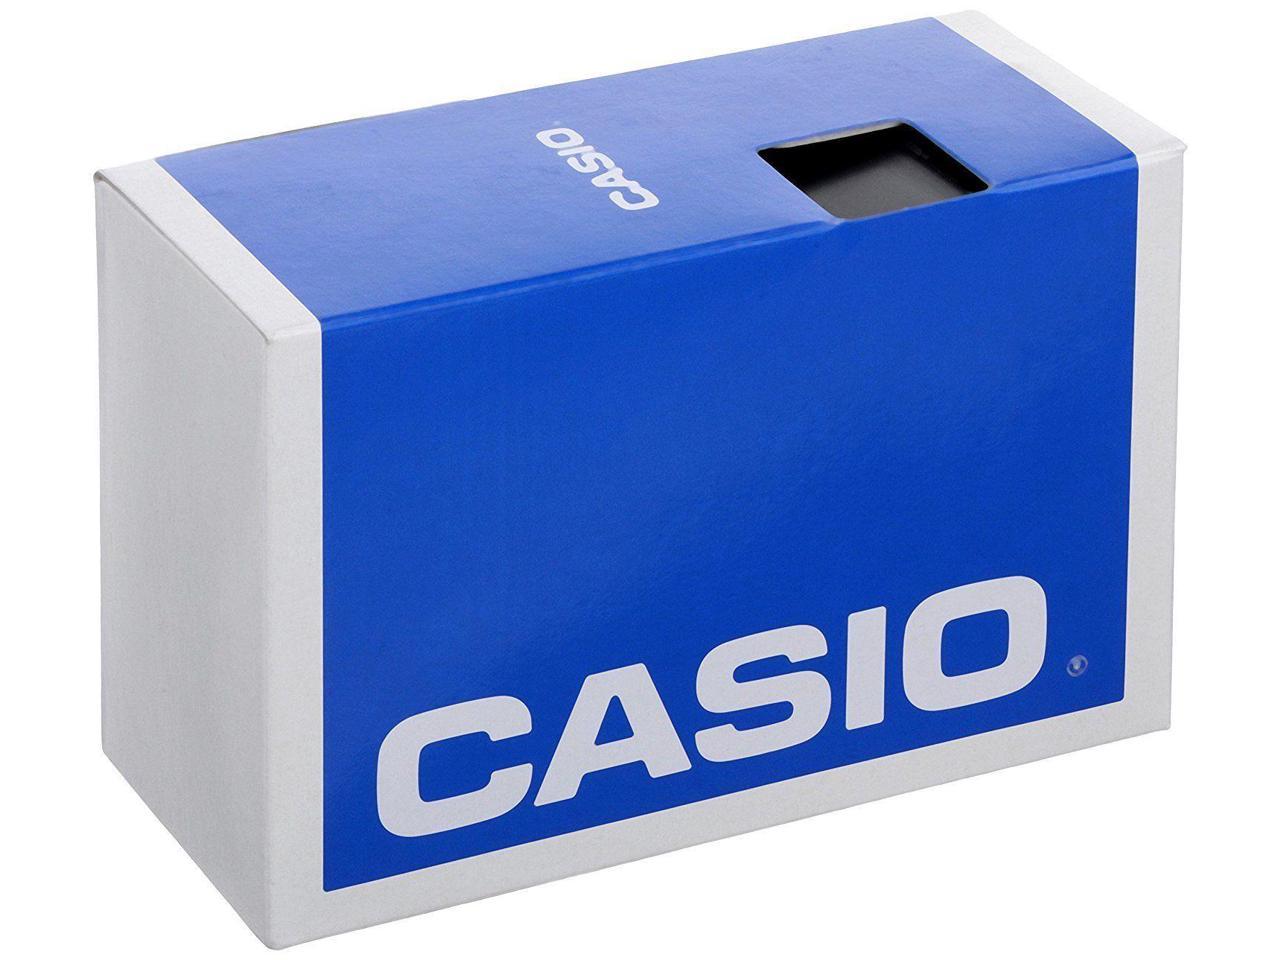 Casio Men's G-Shock Black Classic Digital Watch DW6900-1V - image 5 of 5